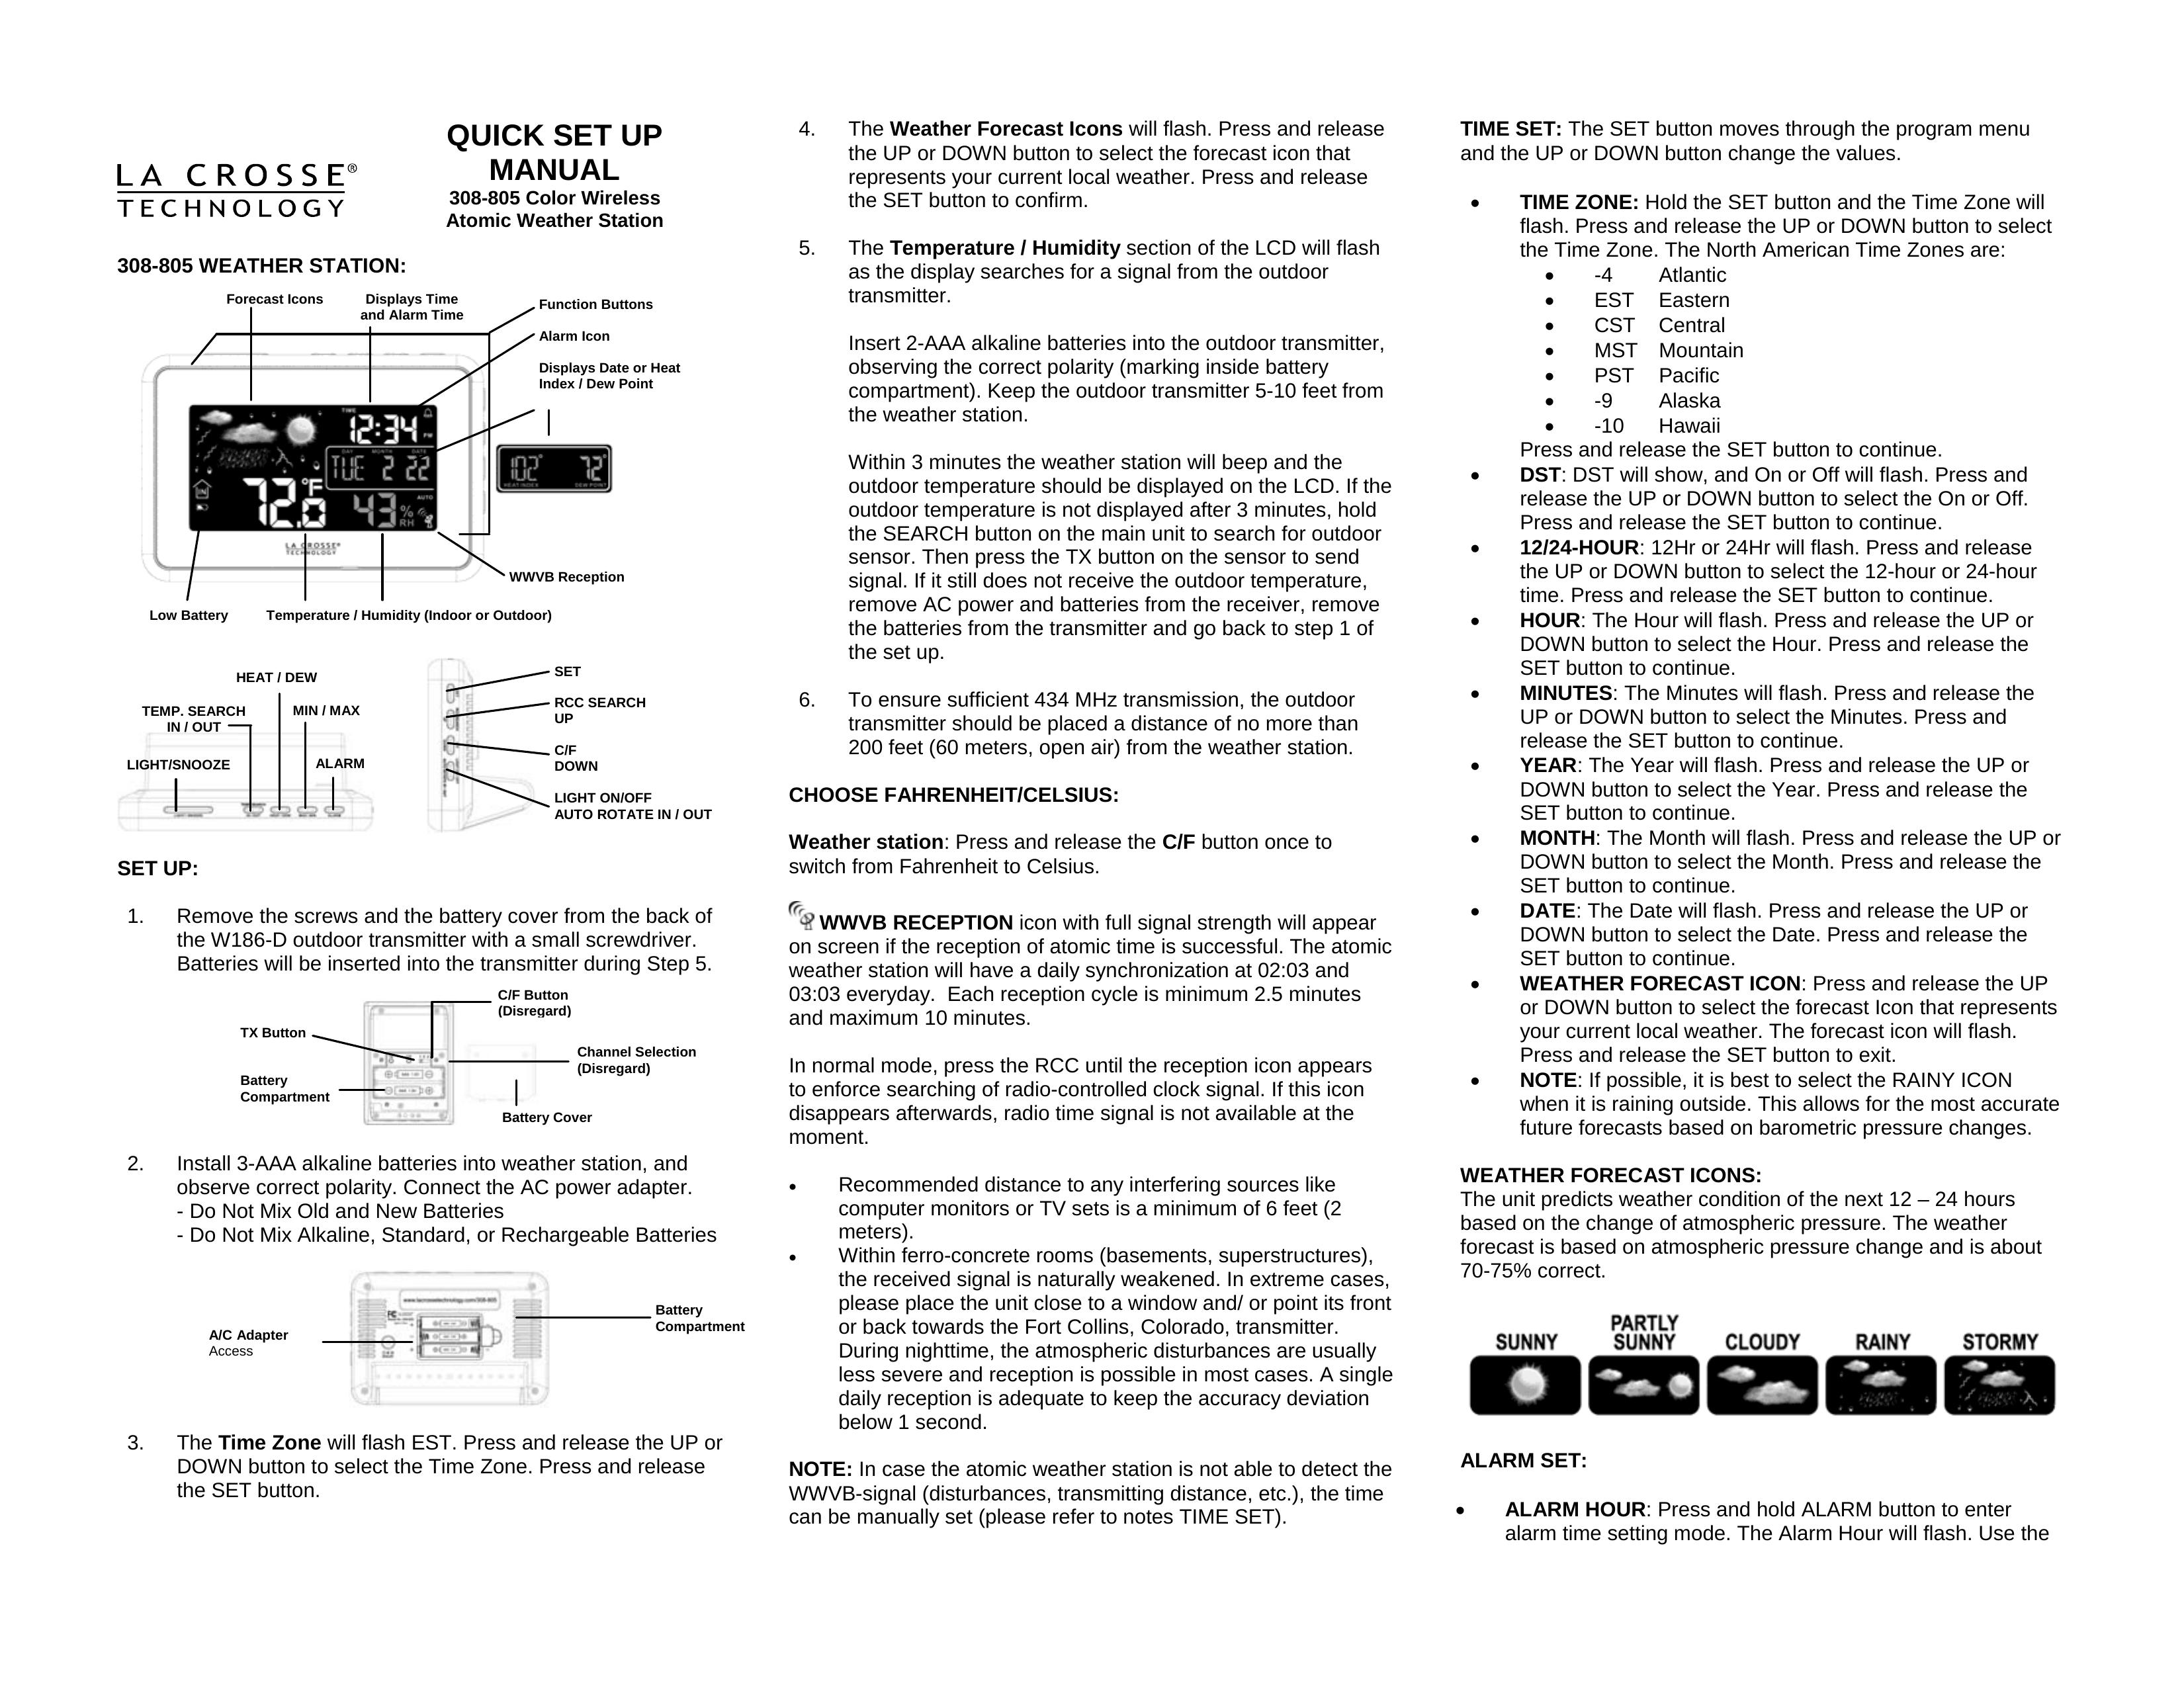 La Crosse Technology 308-805 COLOR WIRELESS Weather Radio User Manual